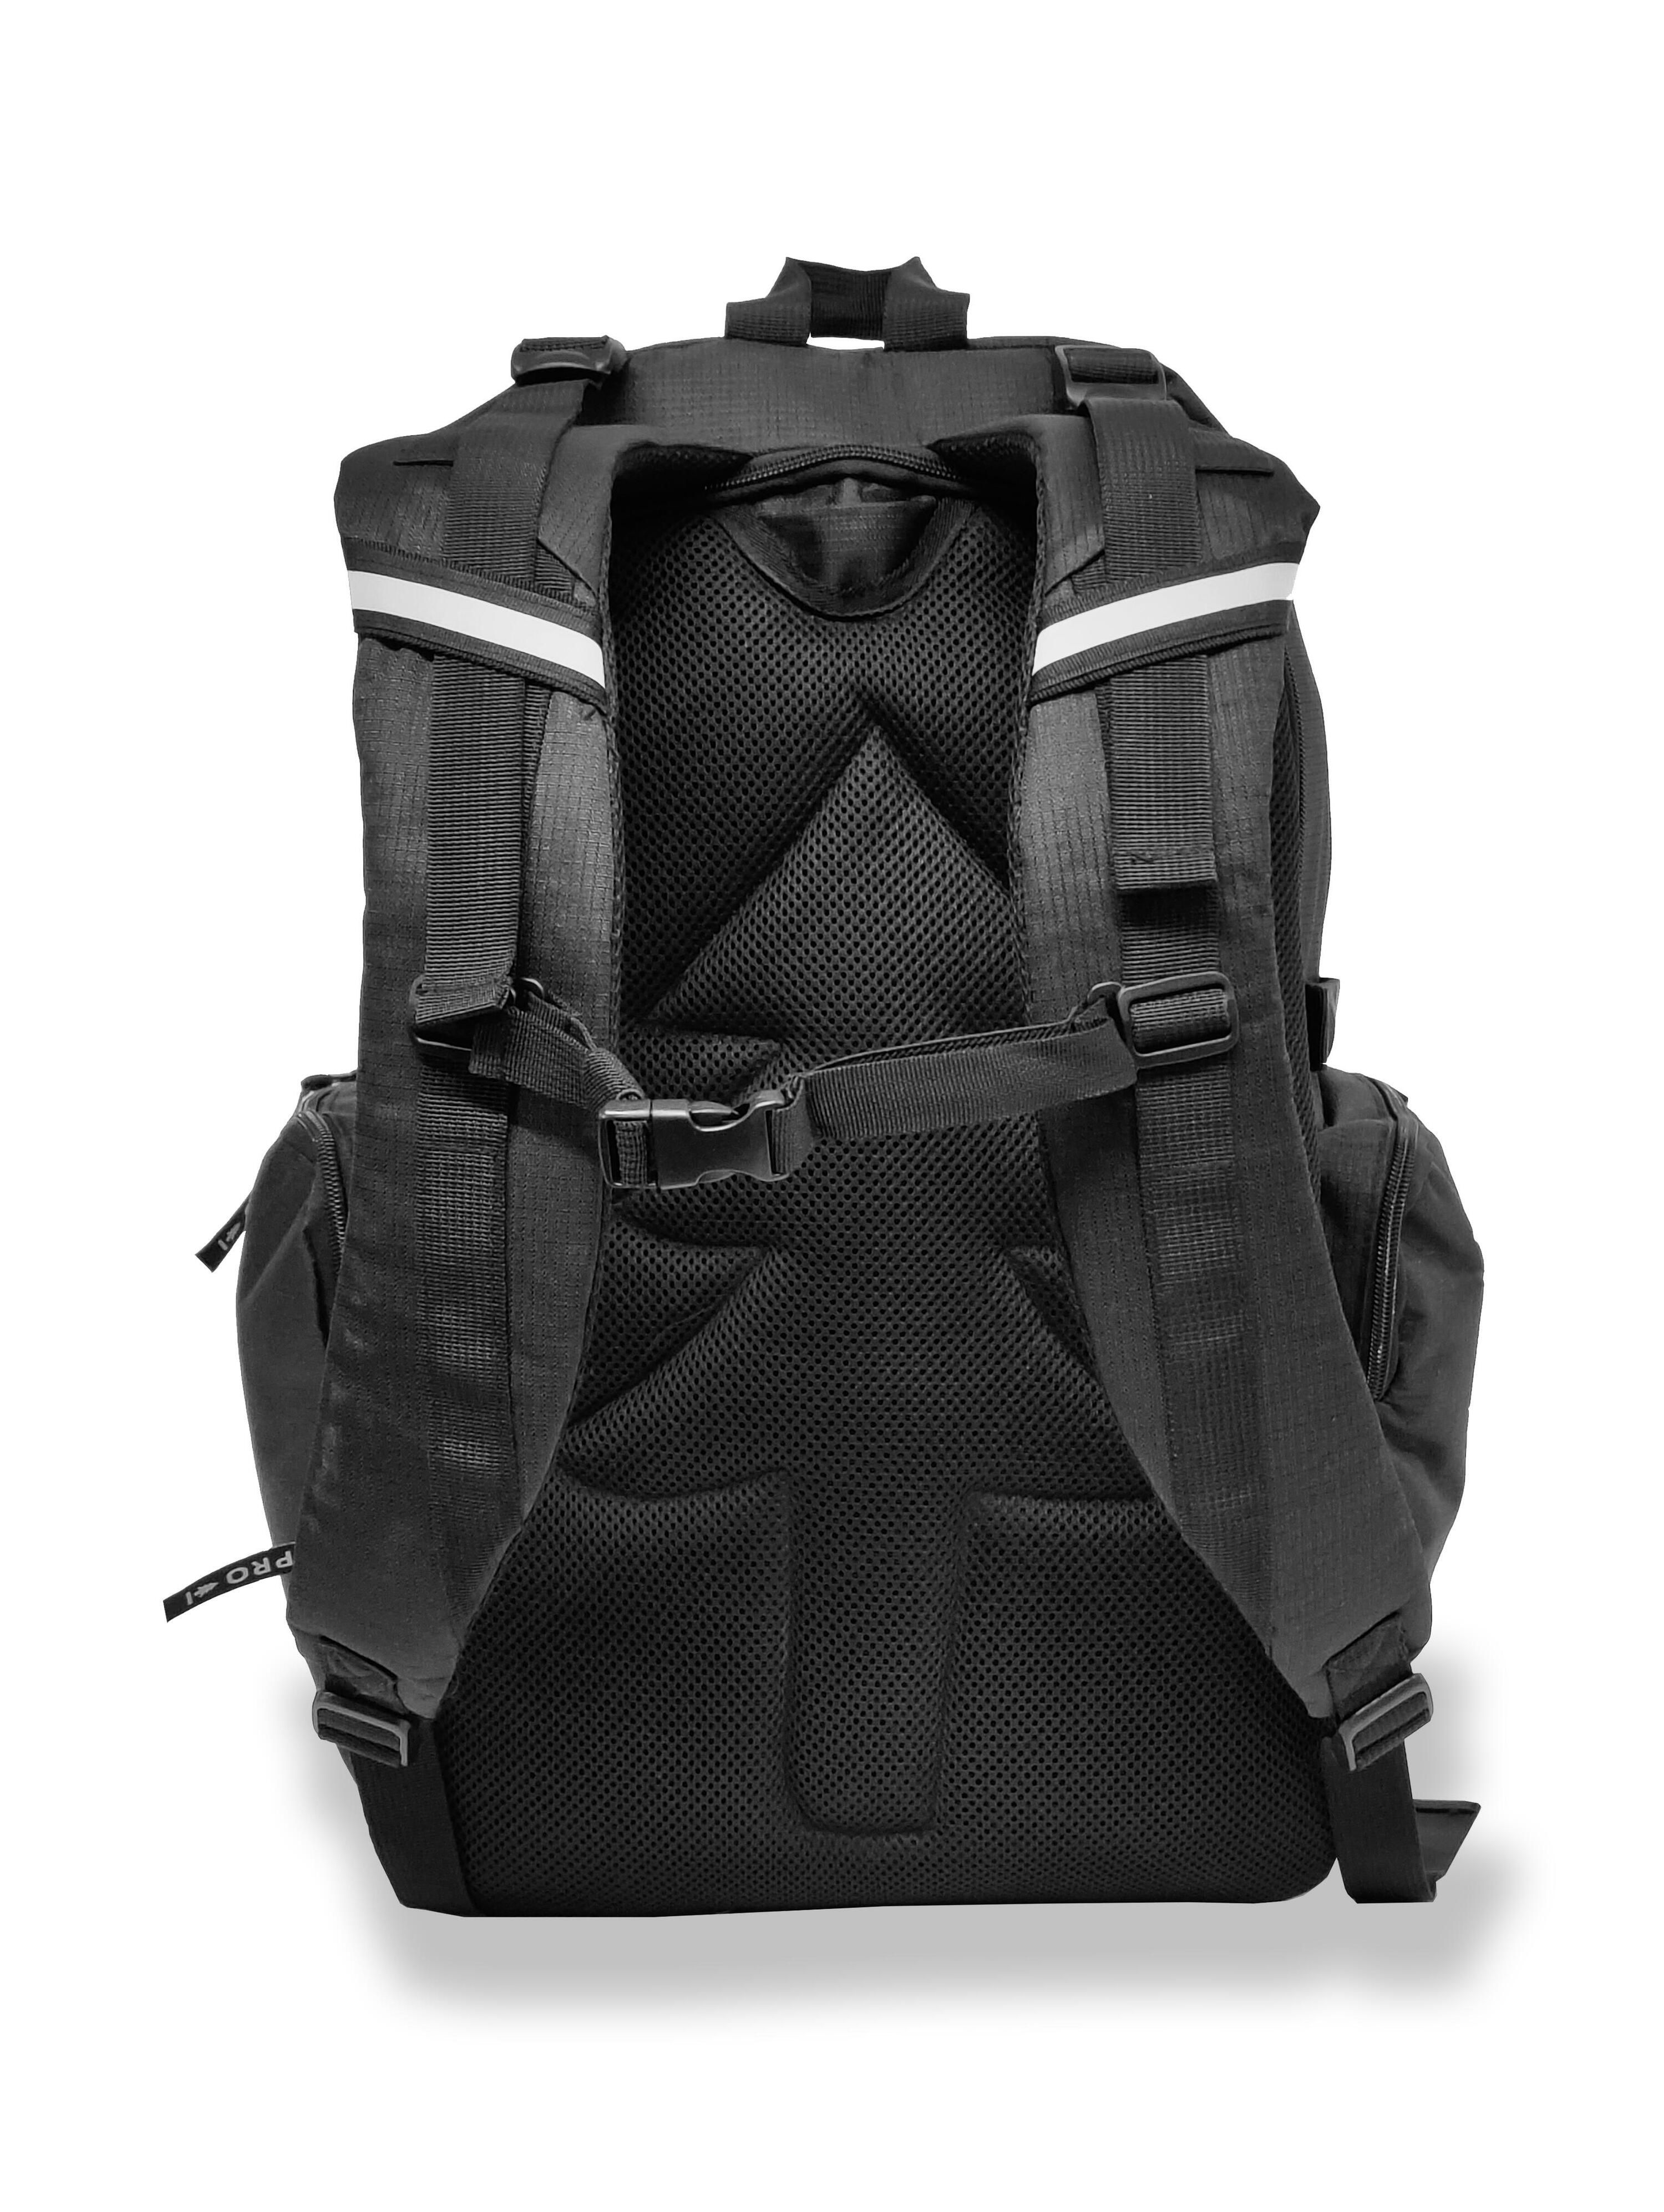 OLPRO 32L Daysac Backpack 3/7